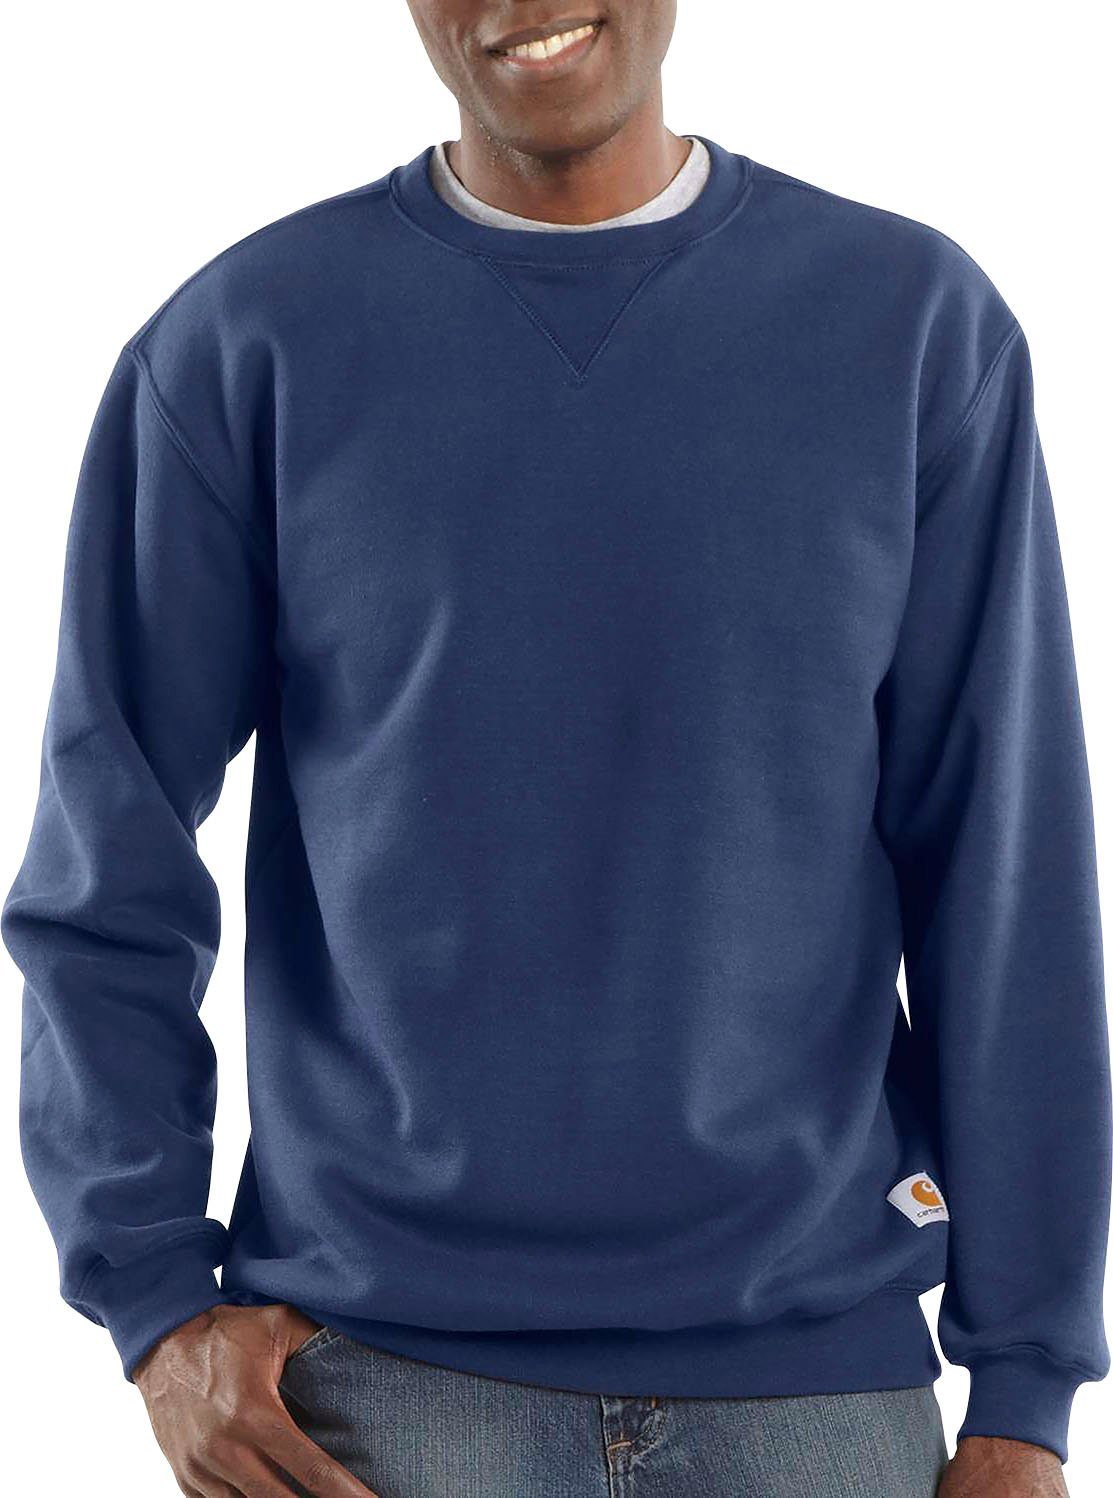 K124 navy Carhartt Sweatshirt